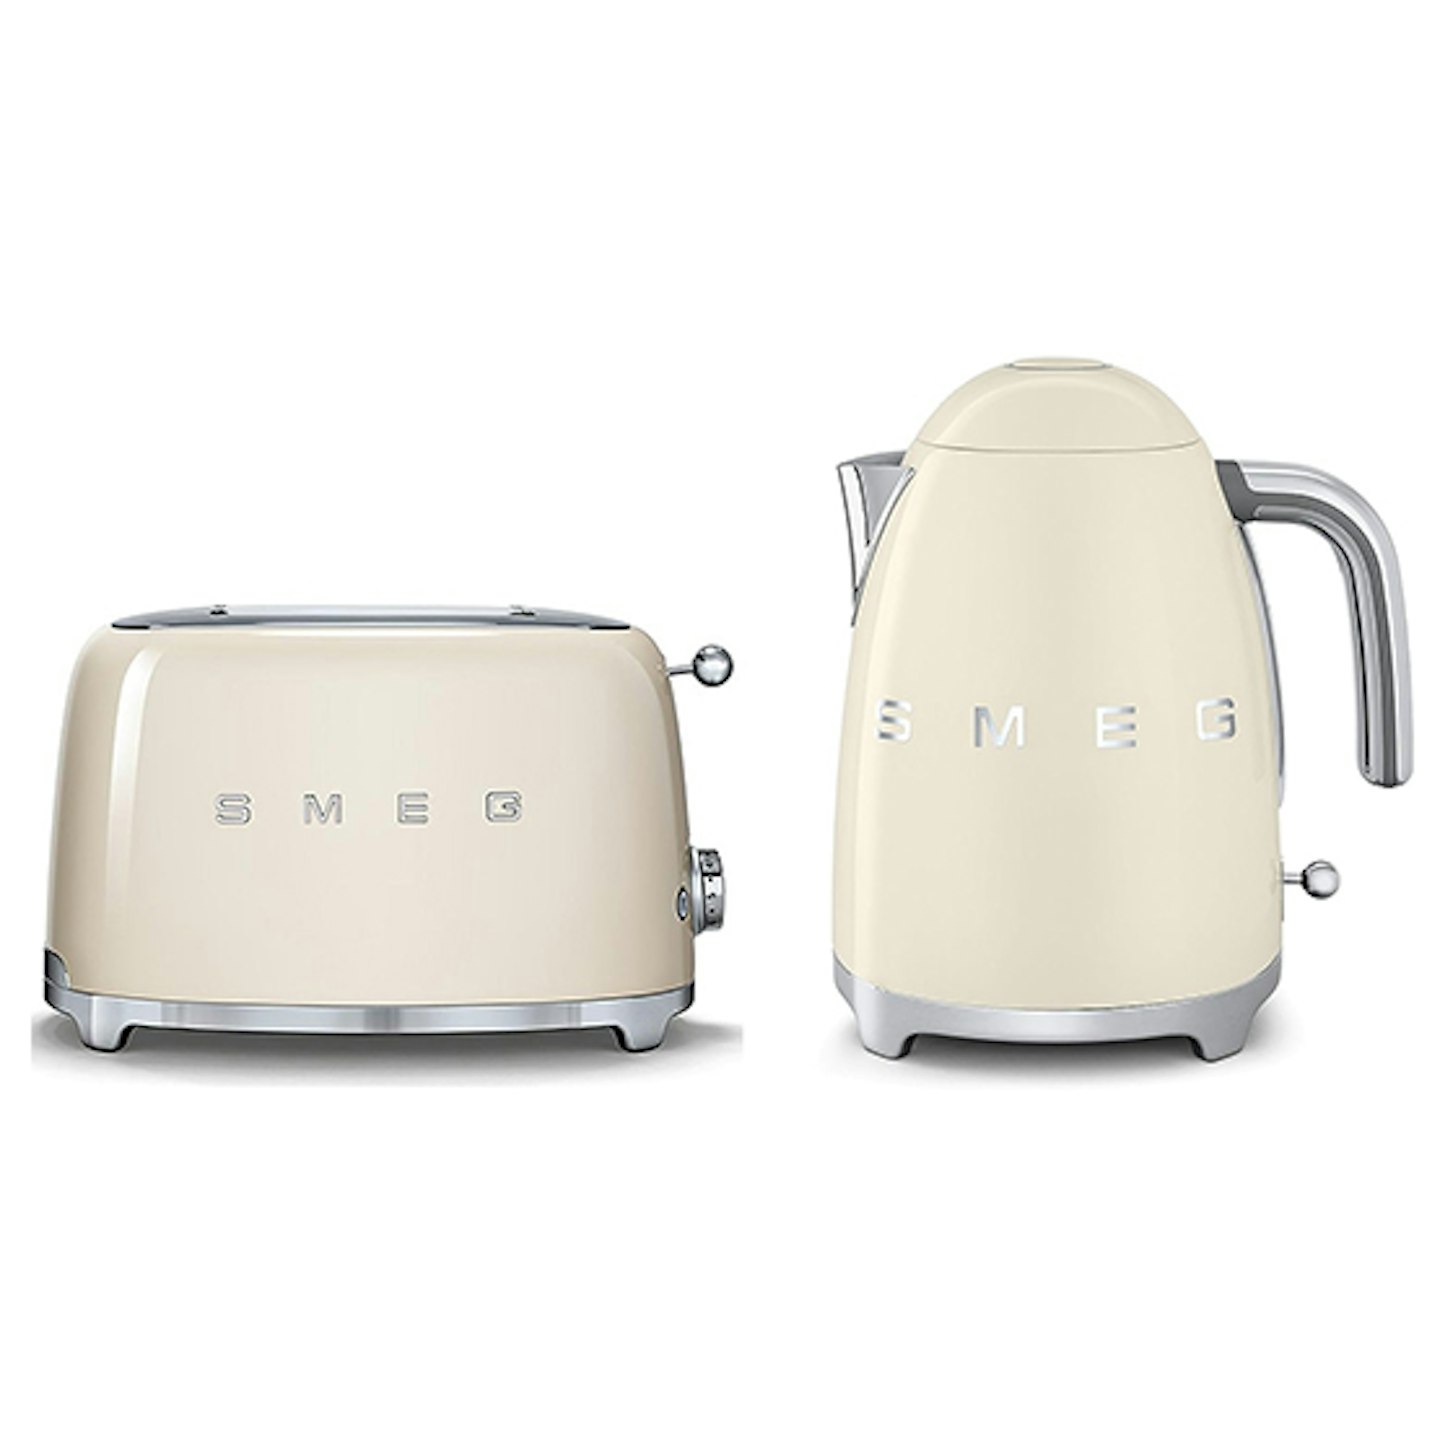 smeg toaster and kettle set